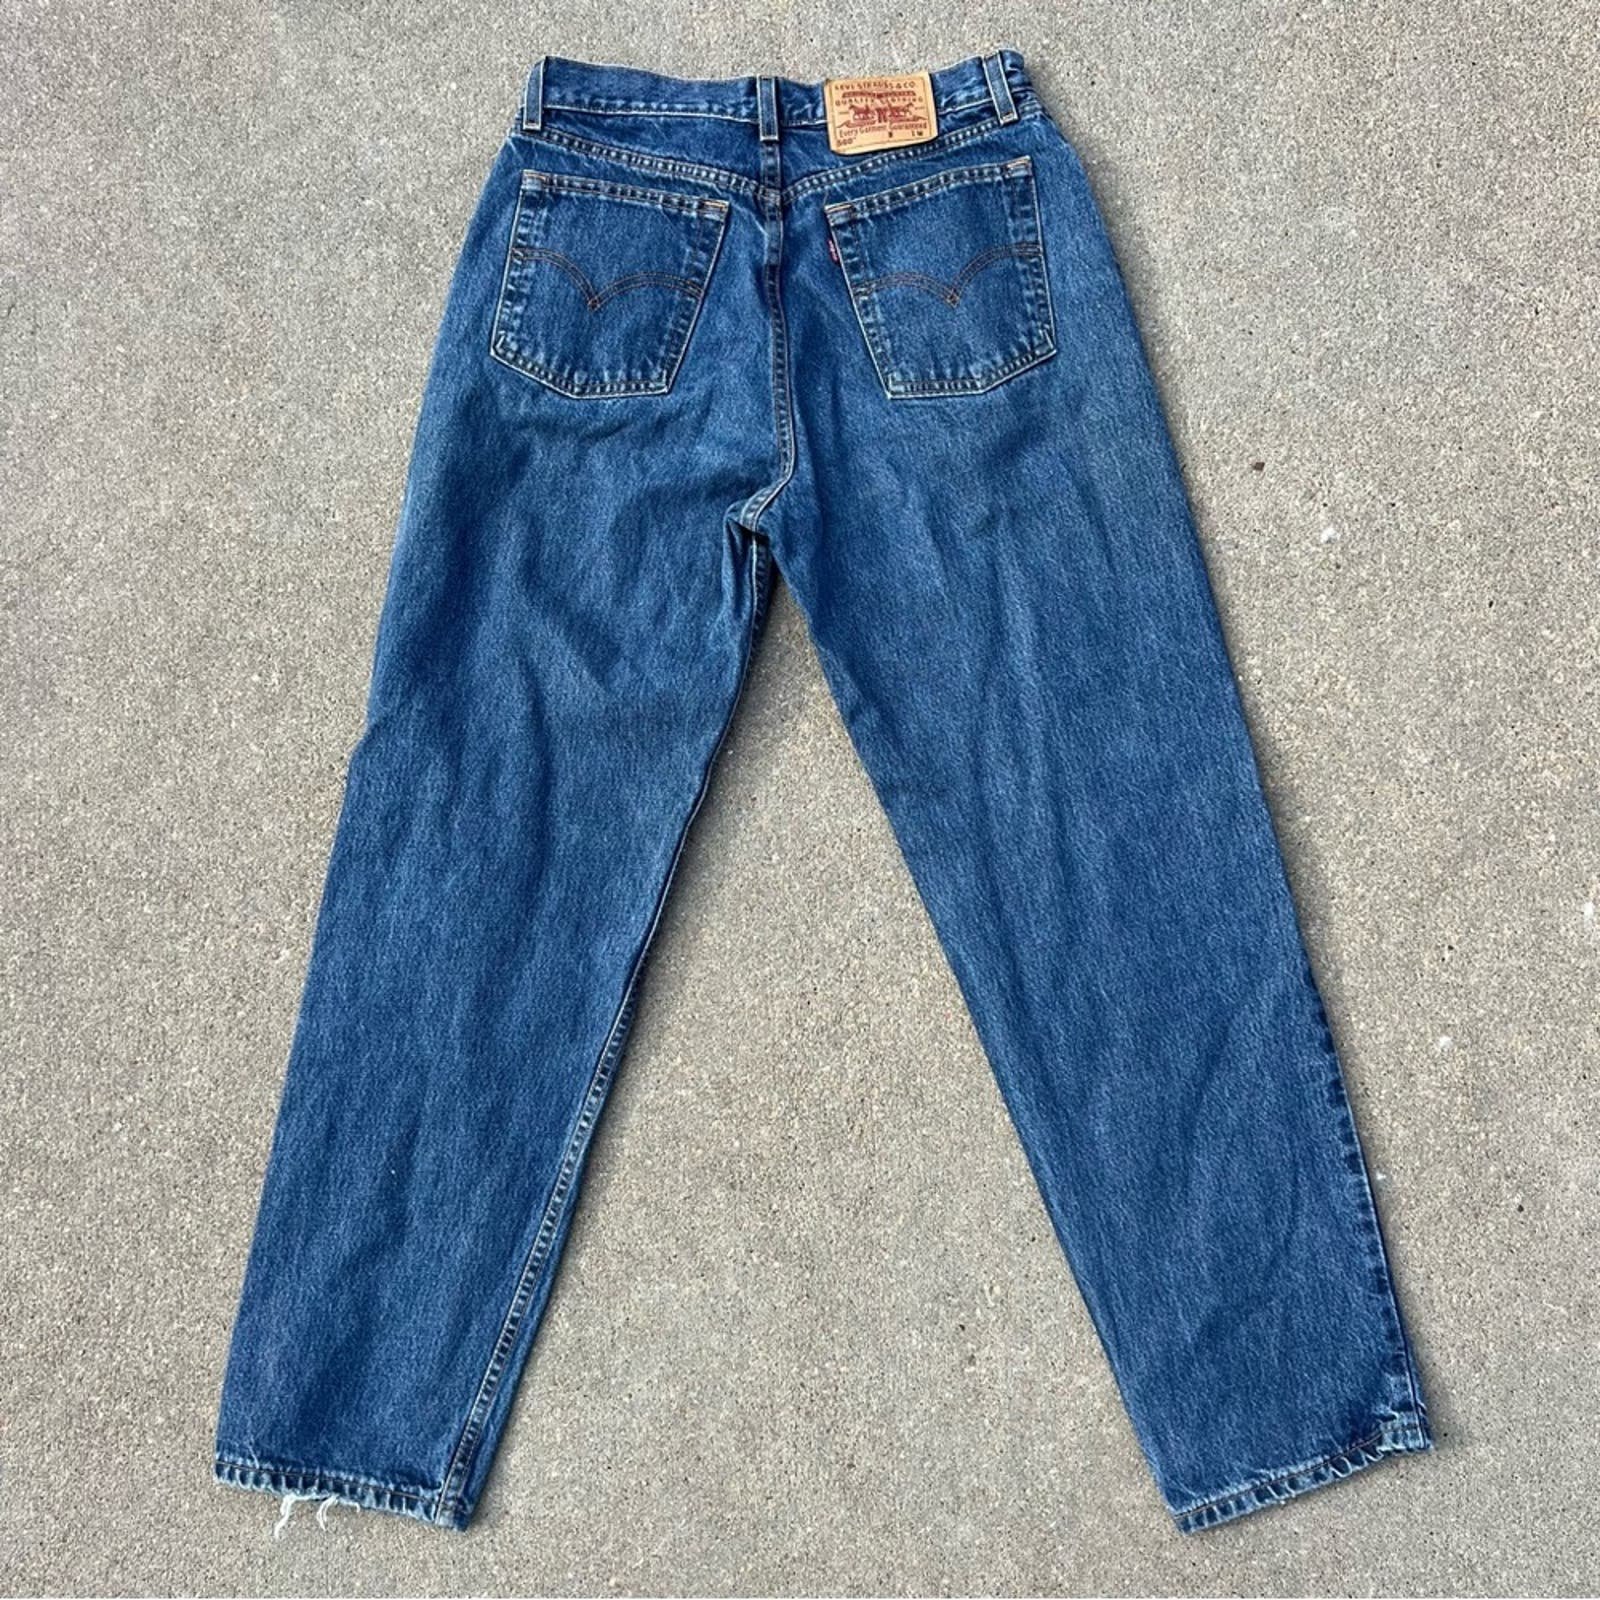 Personality Vintage Y2K Levi’s 560 loose fit straight leg jeans Ladies 10 Mis M ft48Wr2Mf Low Price